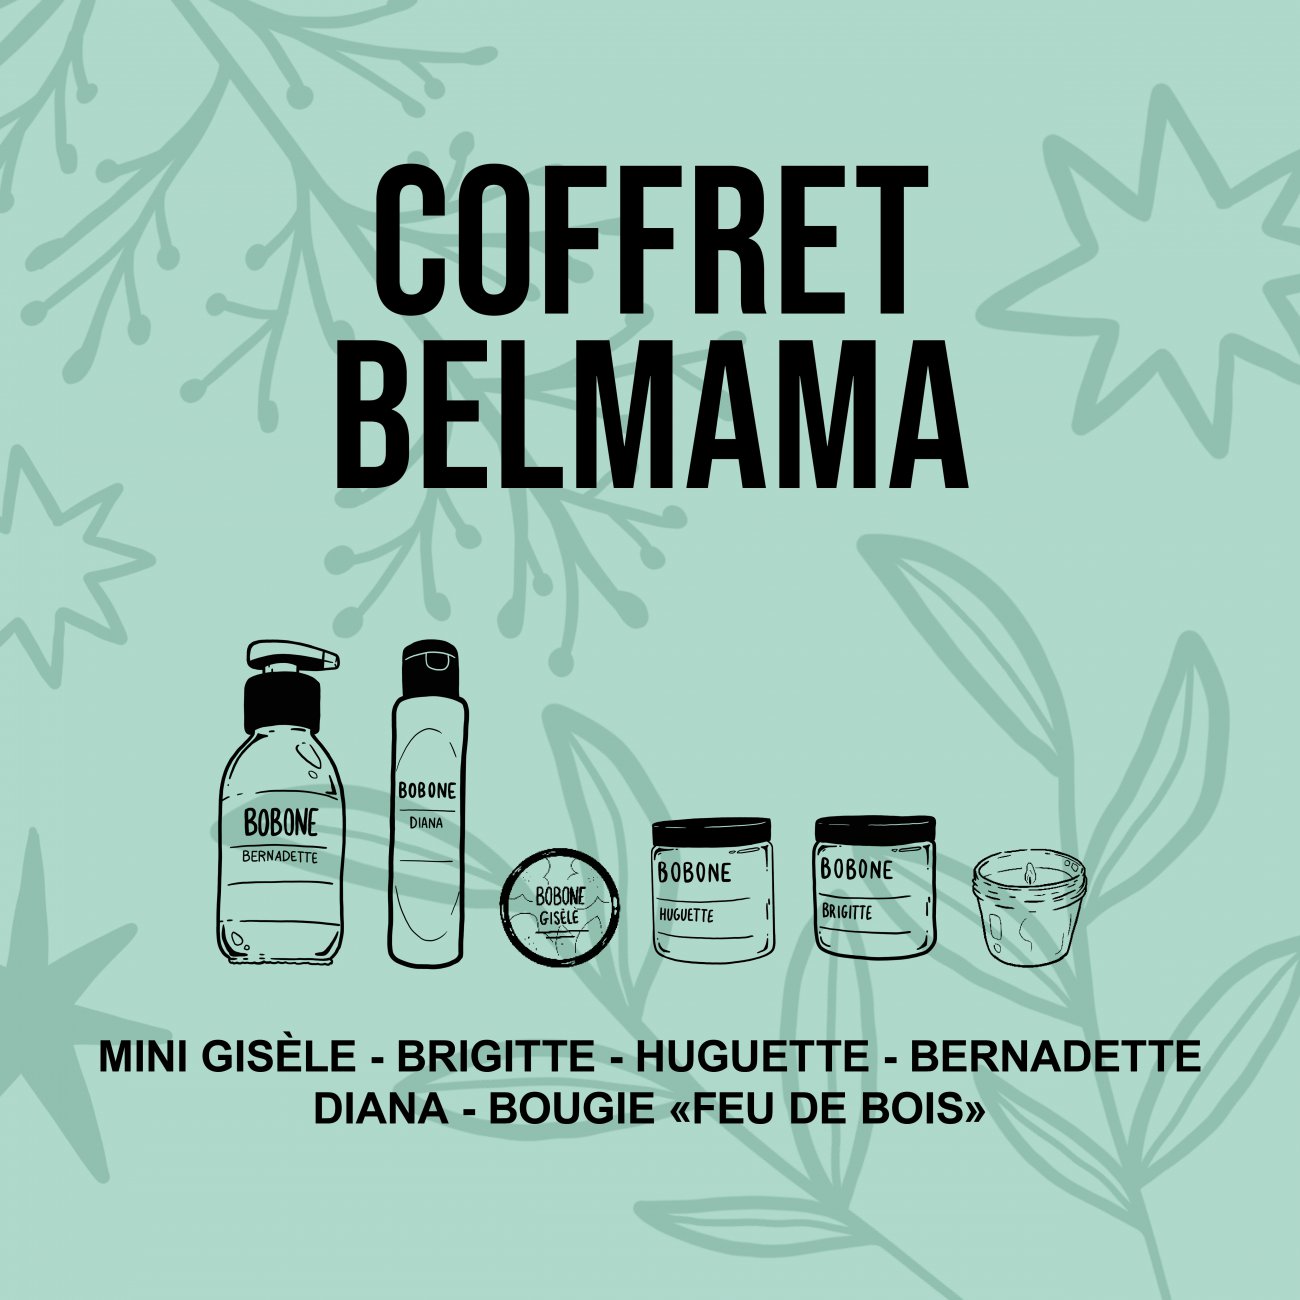 Coffret cosmétique bio et naturel Belmama 1